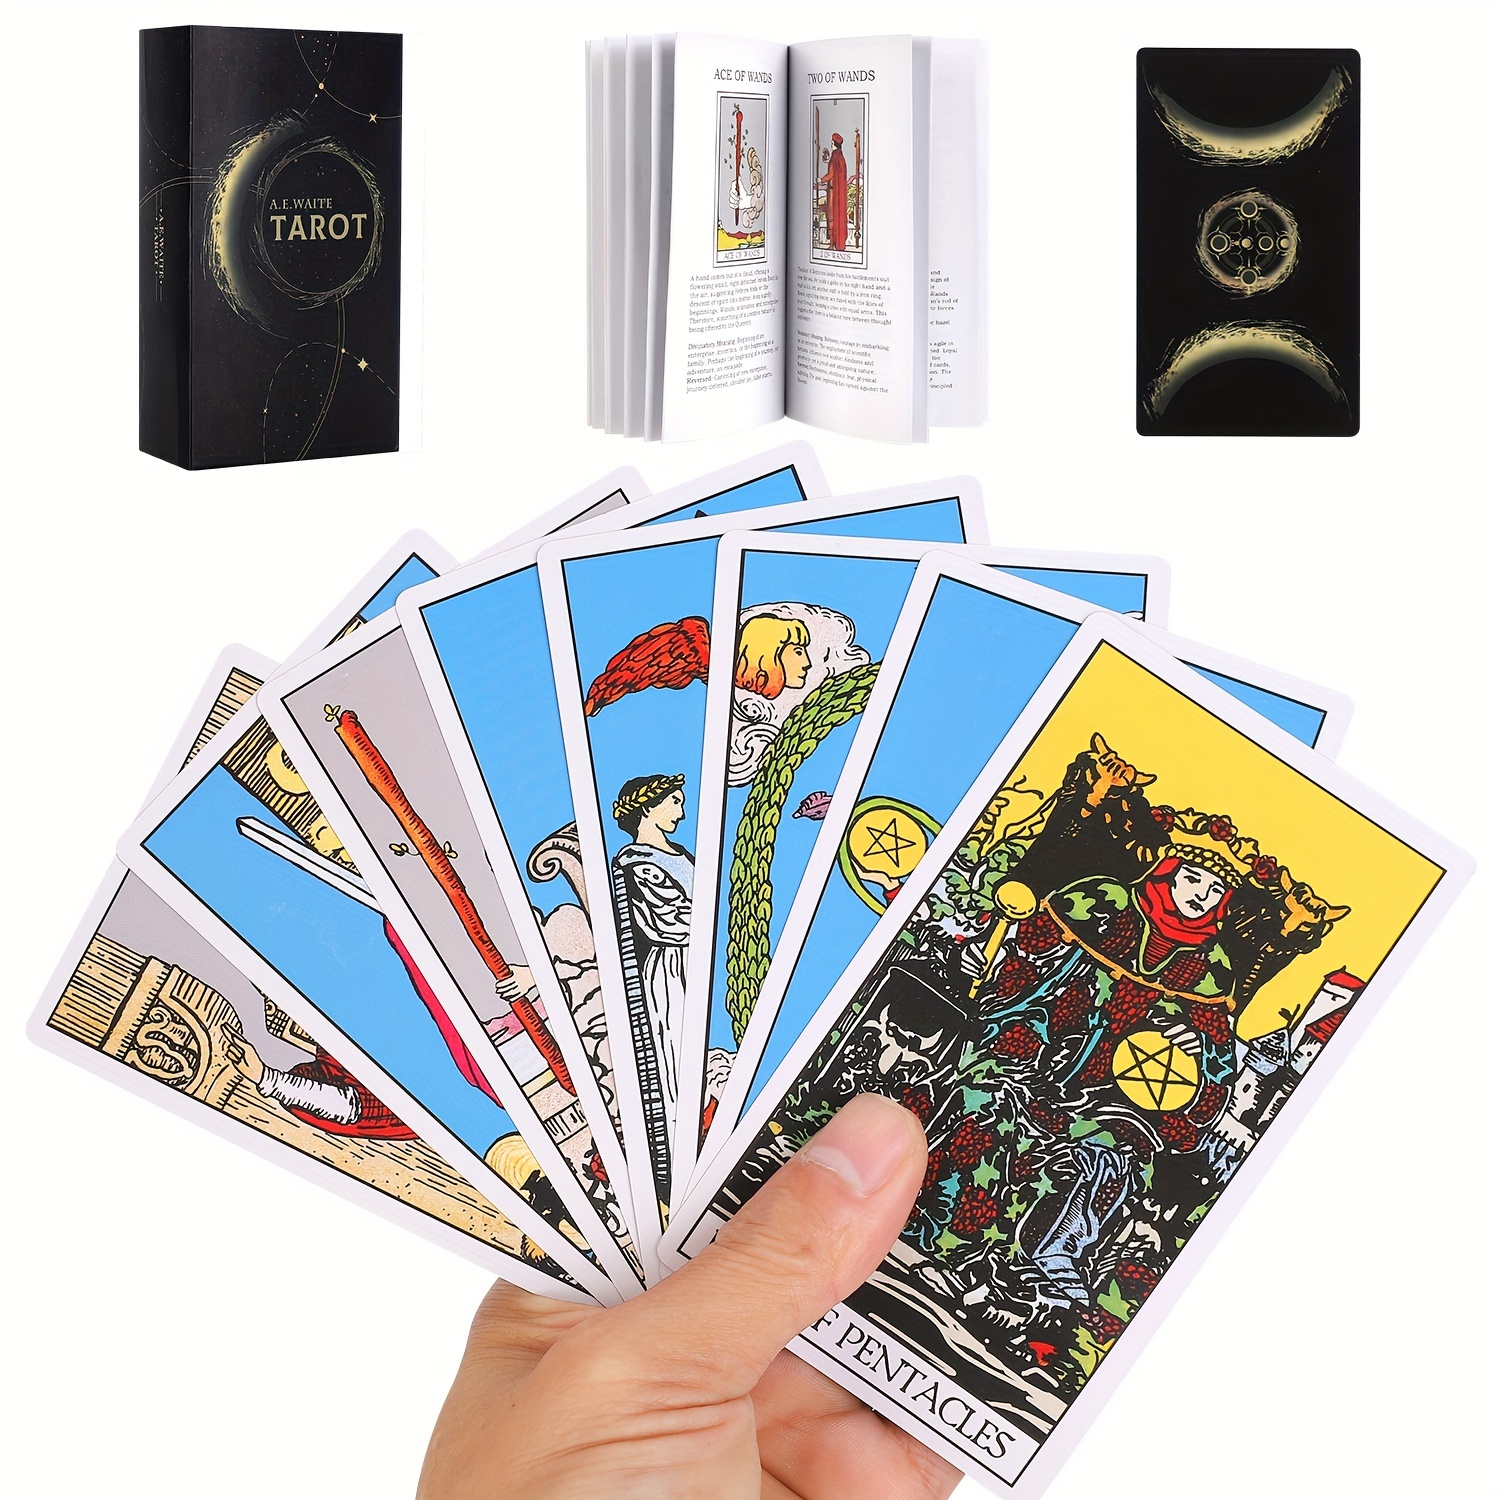  IXIGER Baraja de cartas de tarot, 78 cartas de tarot con juego  de guía para principiantes y expertos, juego de cartas de tarot clásico,  cartas de tarot duraderas, tamaño estándar de